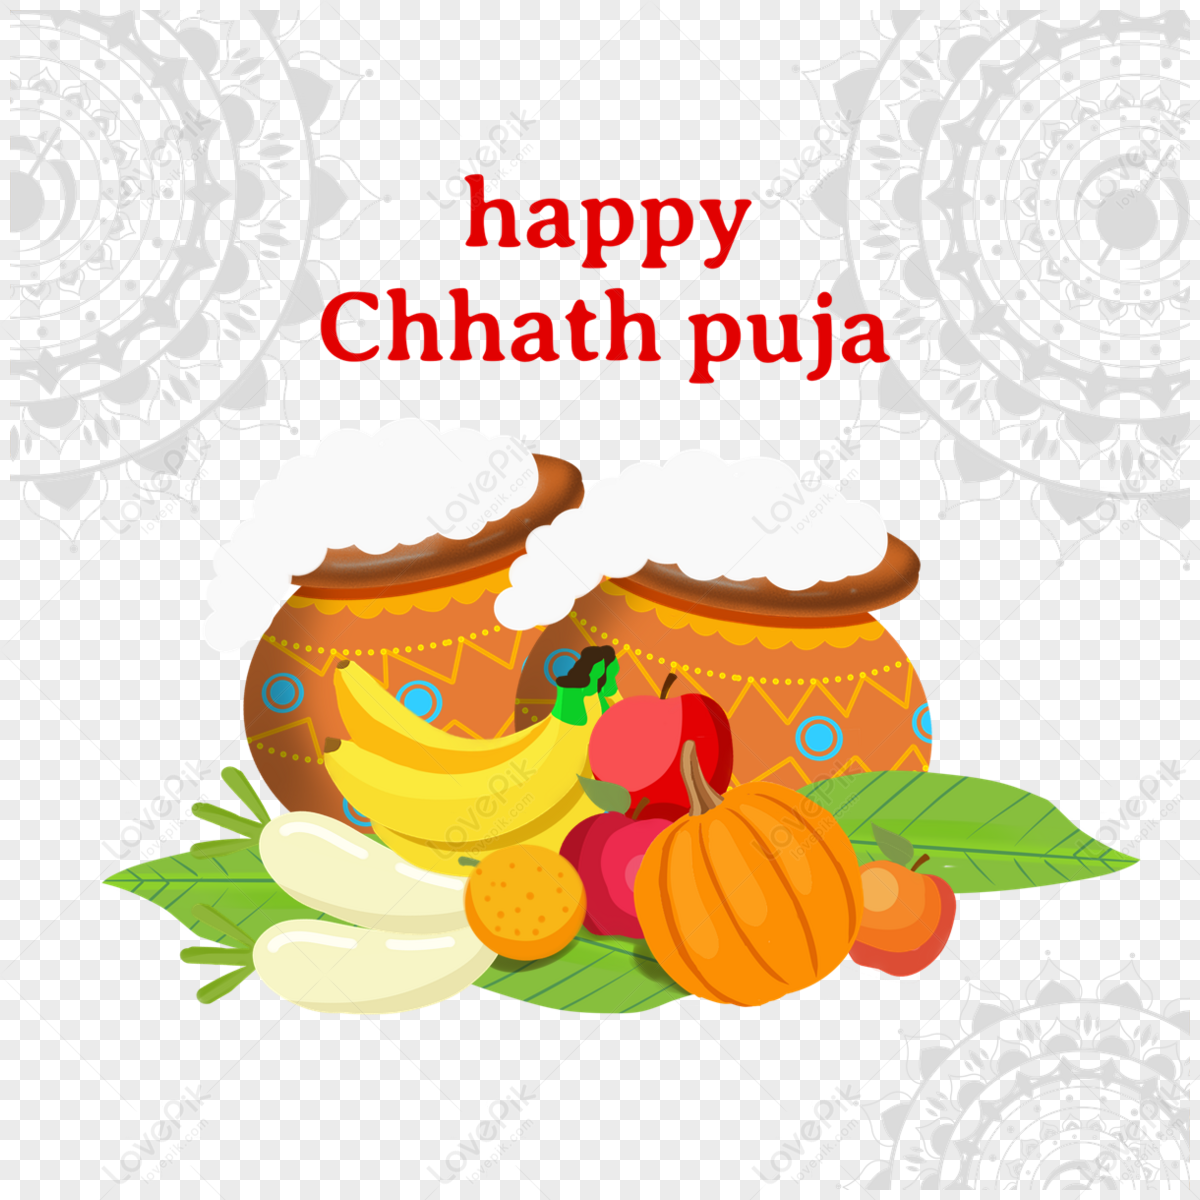 20+ Free Chhath Puja & Bihar Images - Pixabay